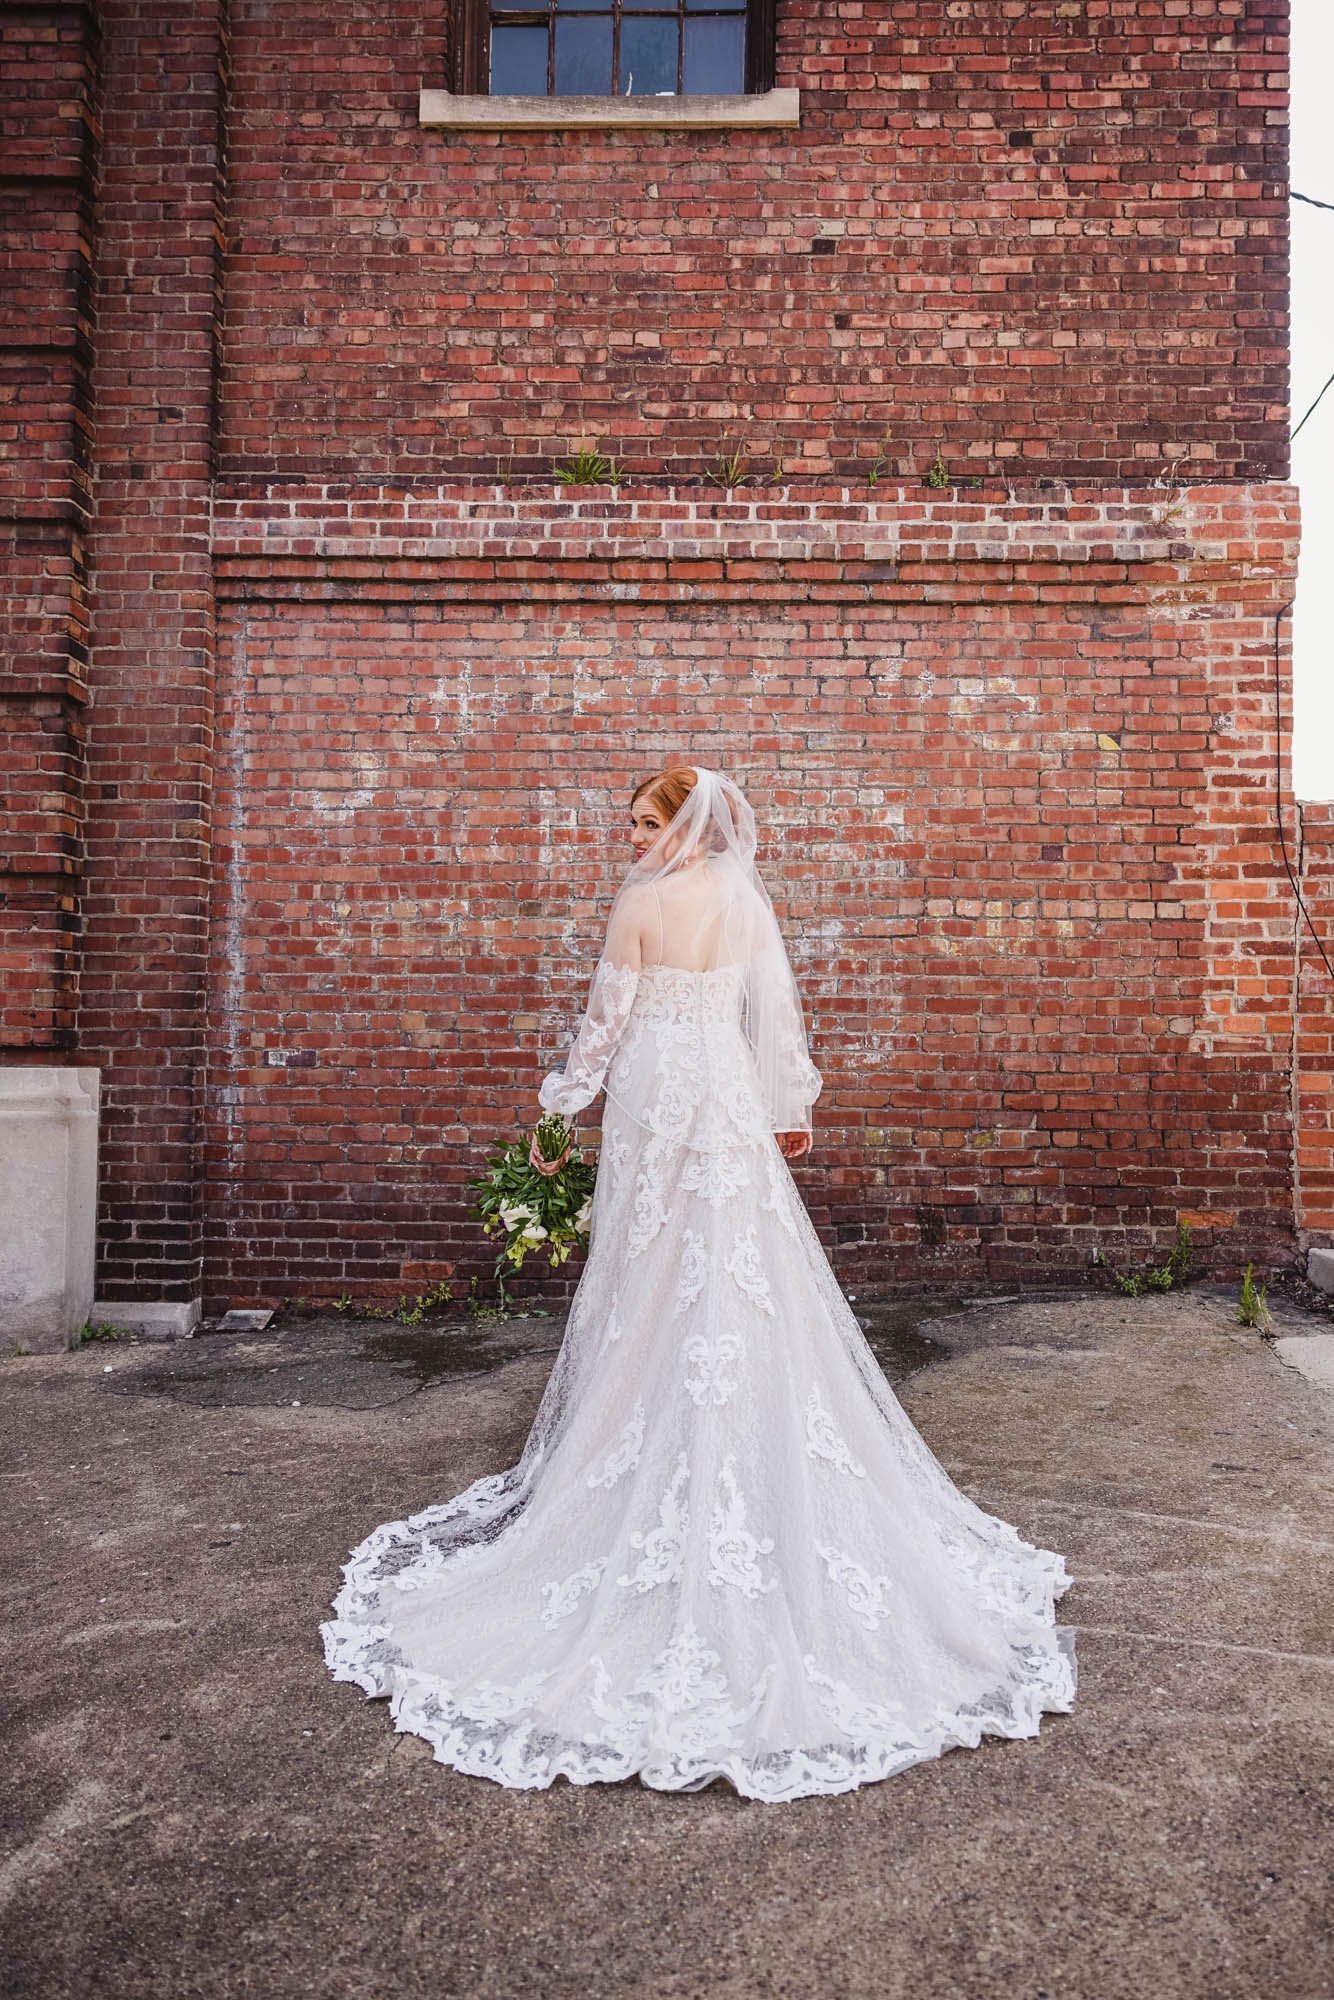 Peoria Illinois Warehouse District Wedding Photography